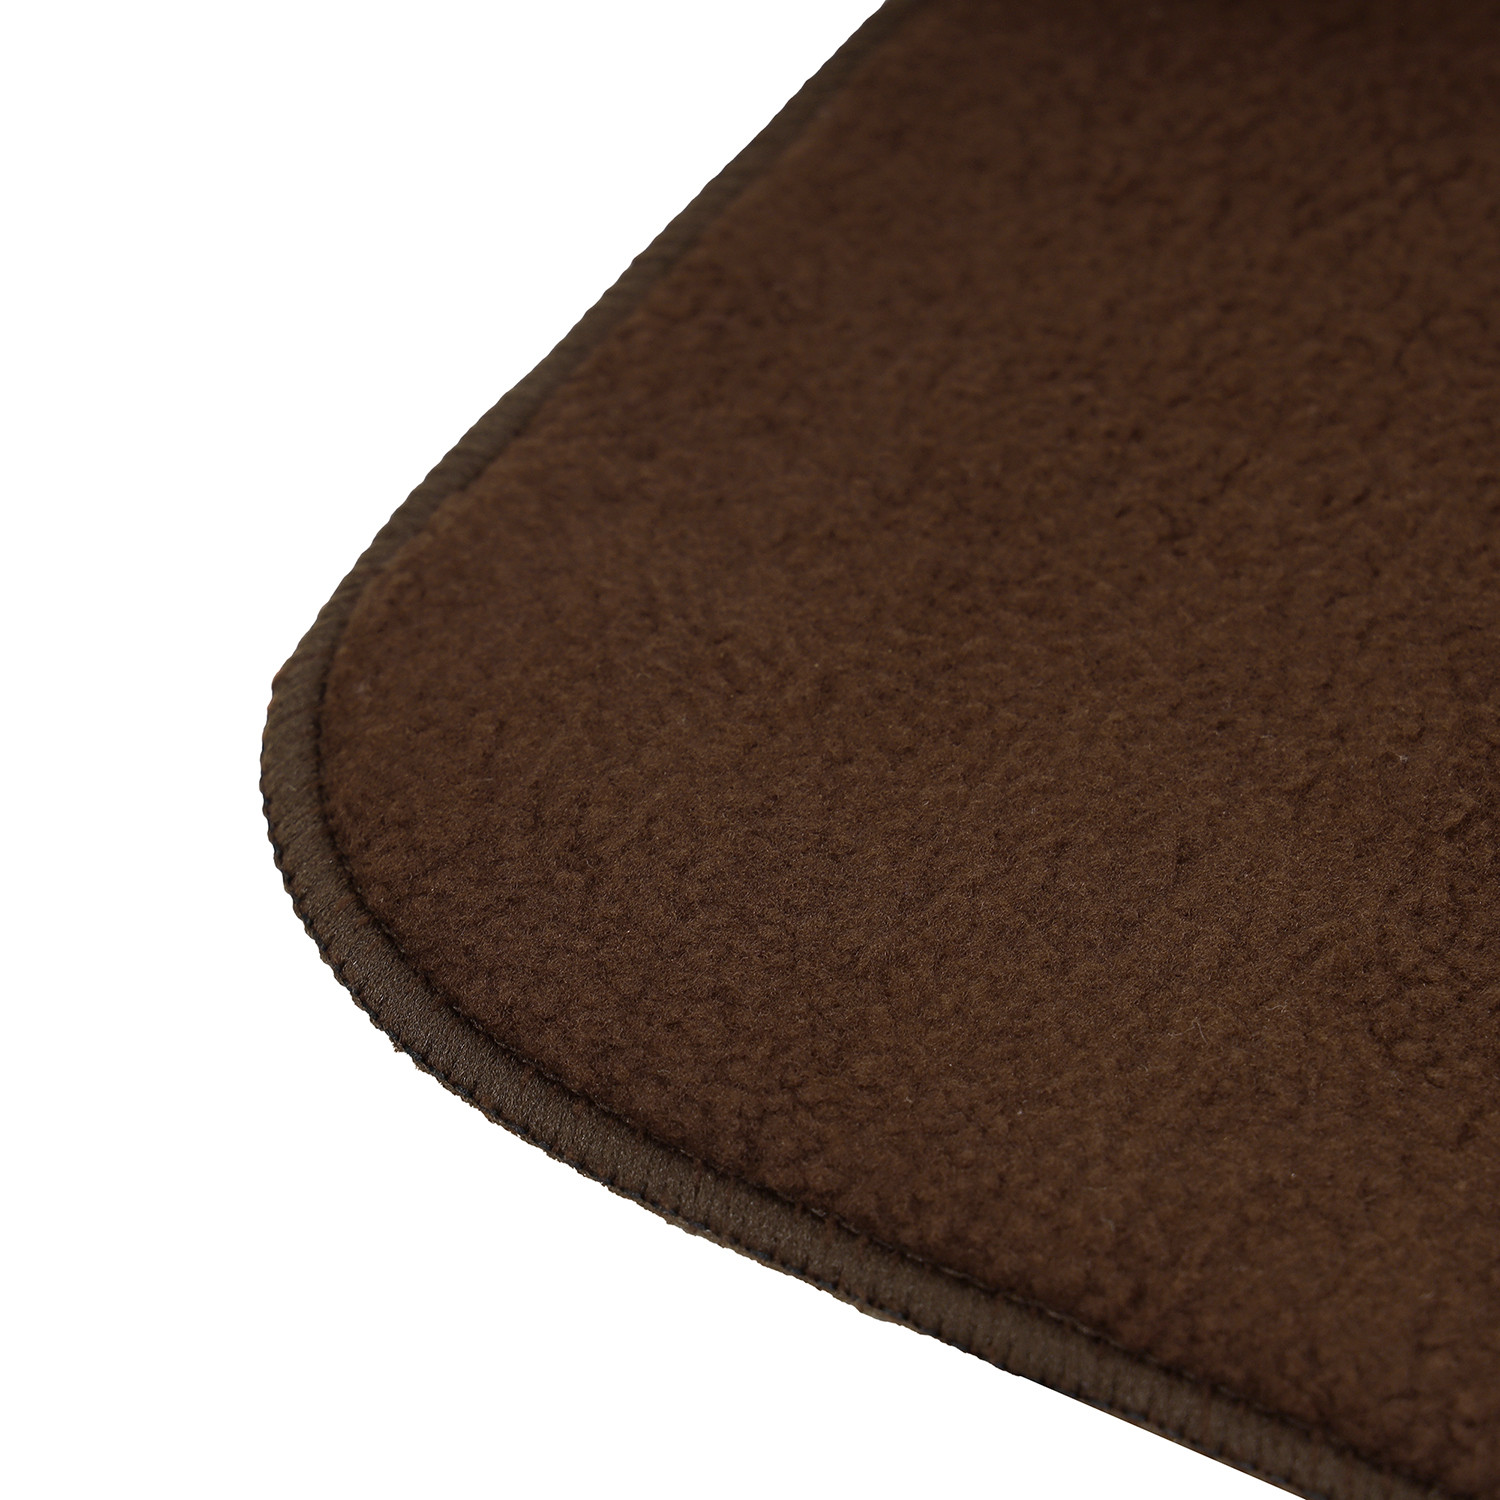 Kuber Industries Dish Dry Mat | Microfiber Drying Mat | Reversible Kitchen Drying Mat | Absorbent Mat | Kitchen Dish Dry Mat | 50x70 | Pack of 2 | Light Purple & Brown